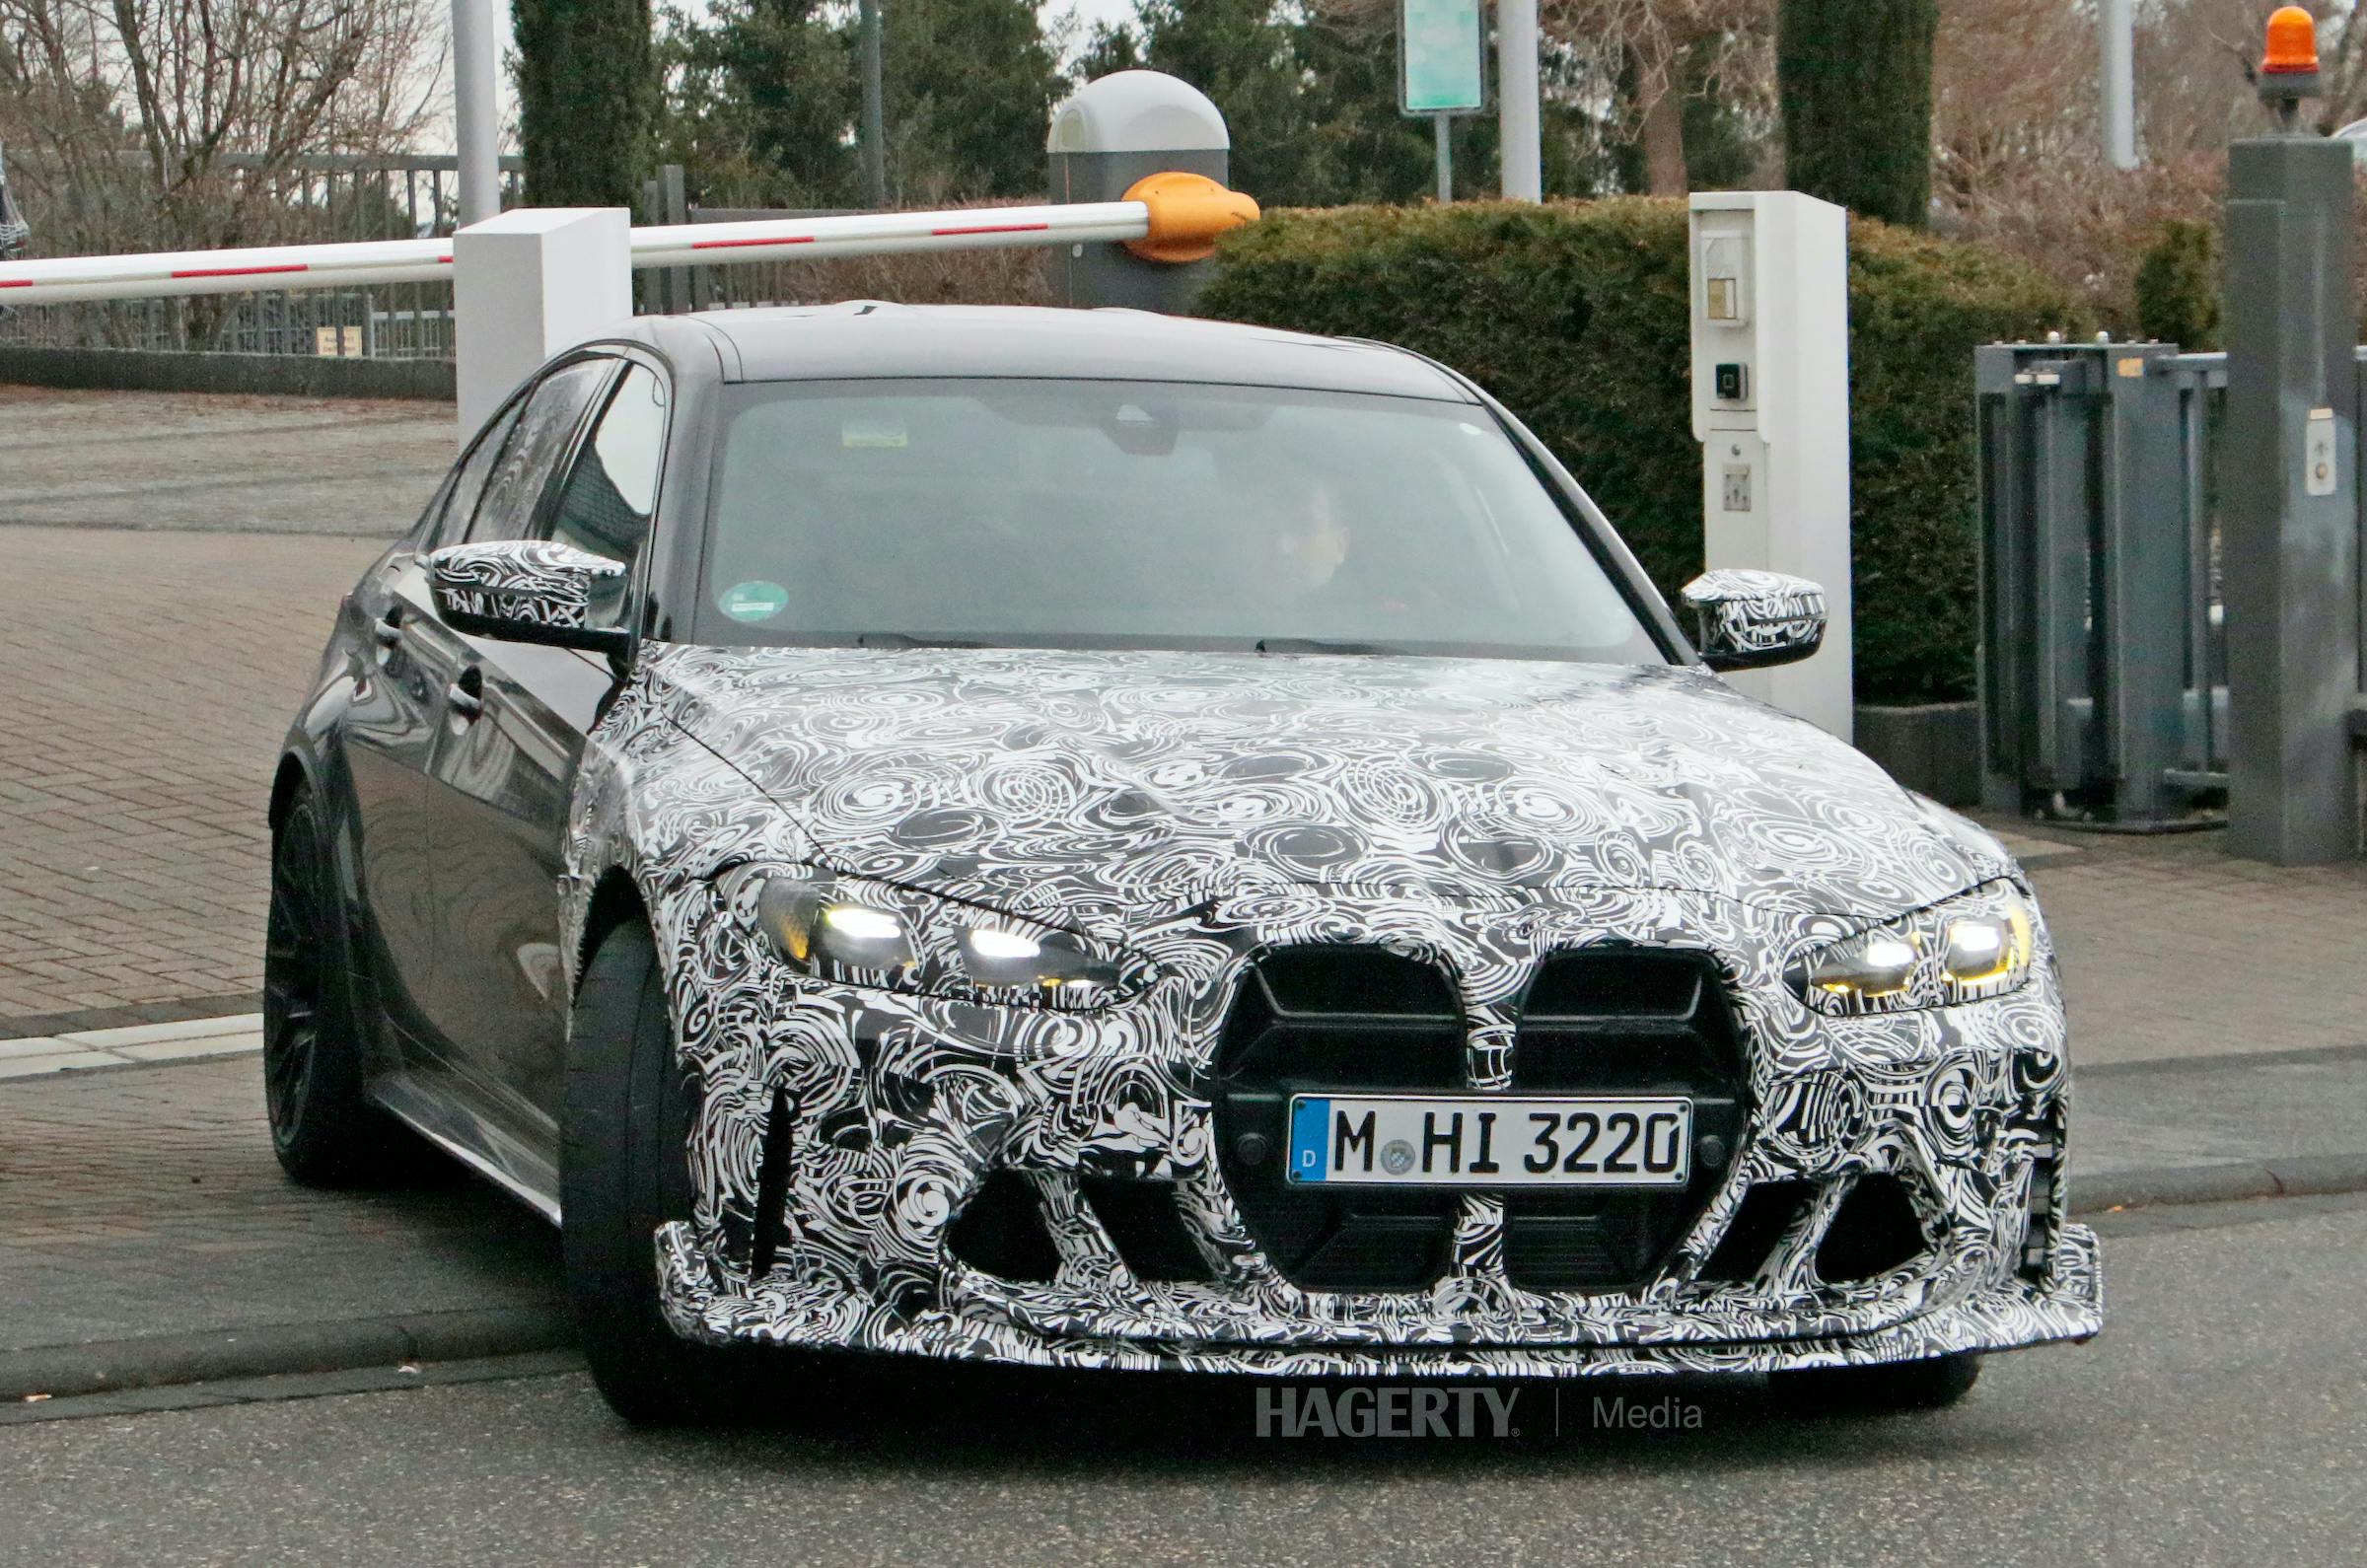 BMW M3 CS spied front